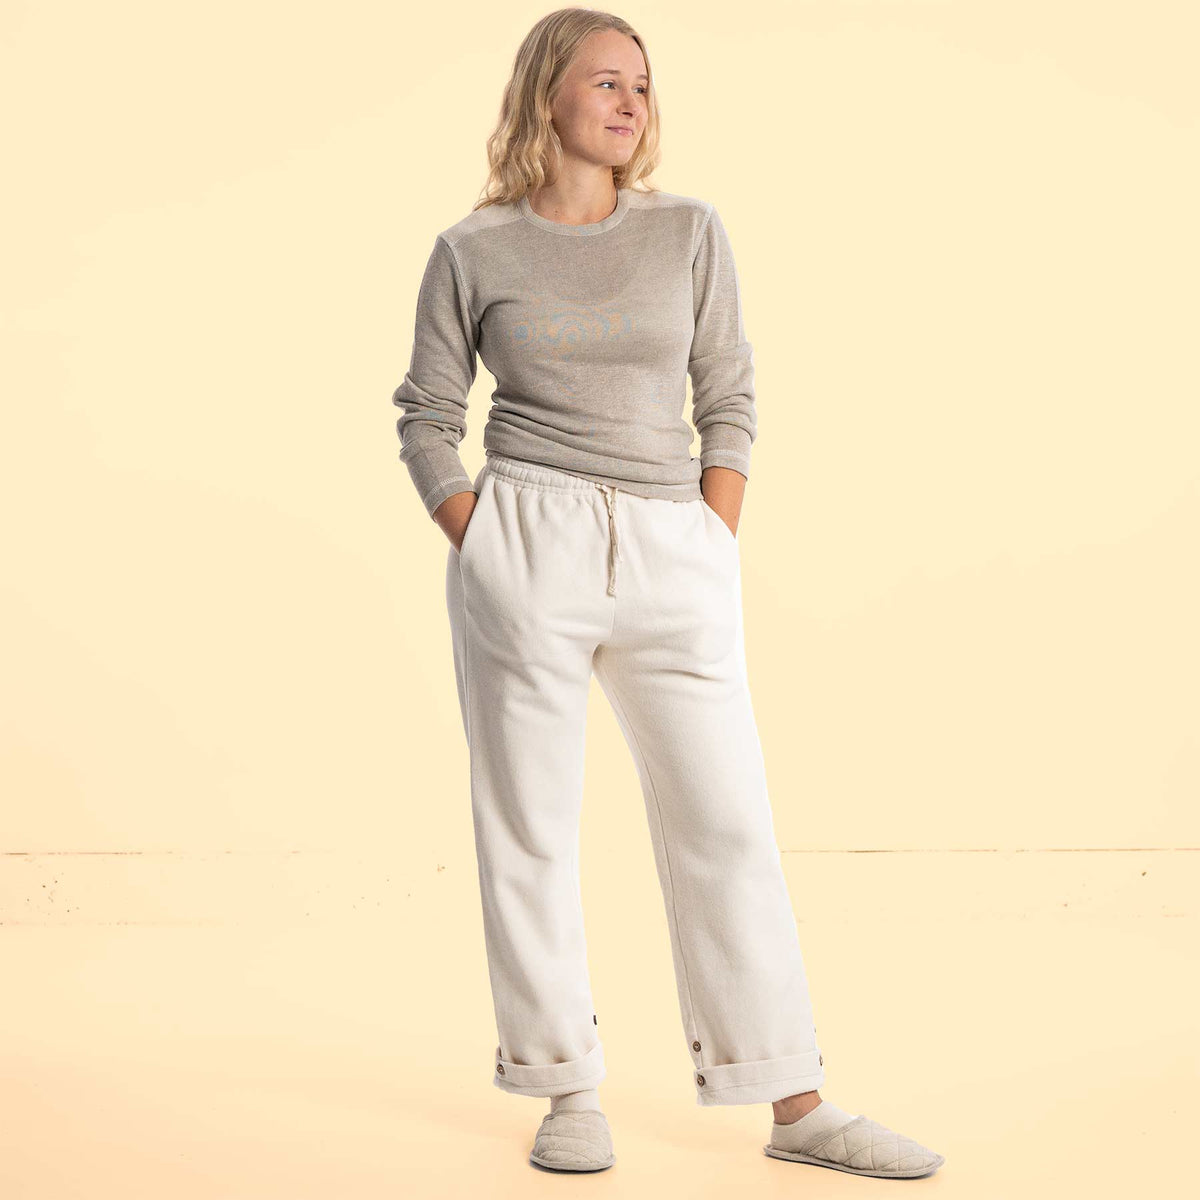 48 Wholesale Womans Fleece Lined Pants